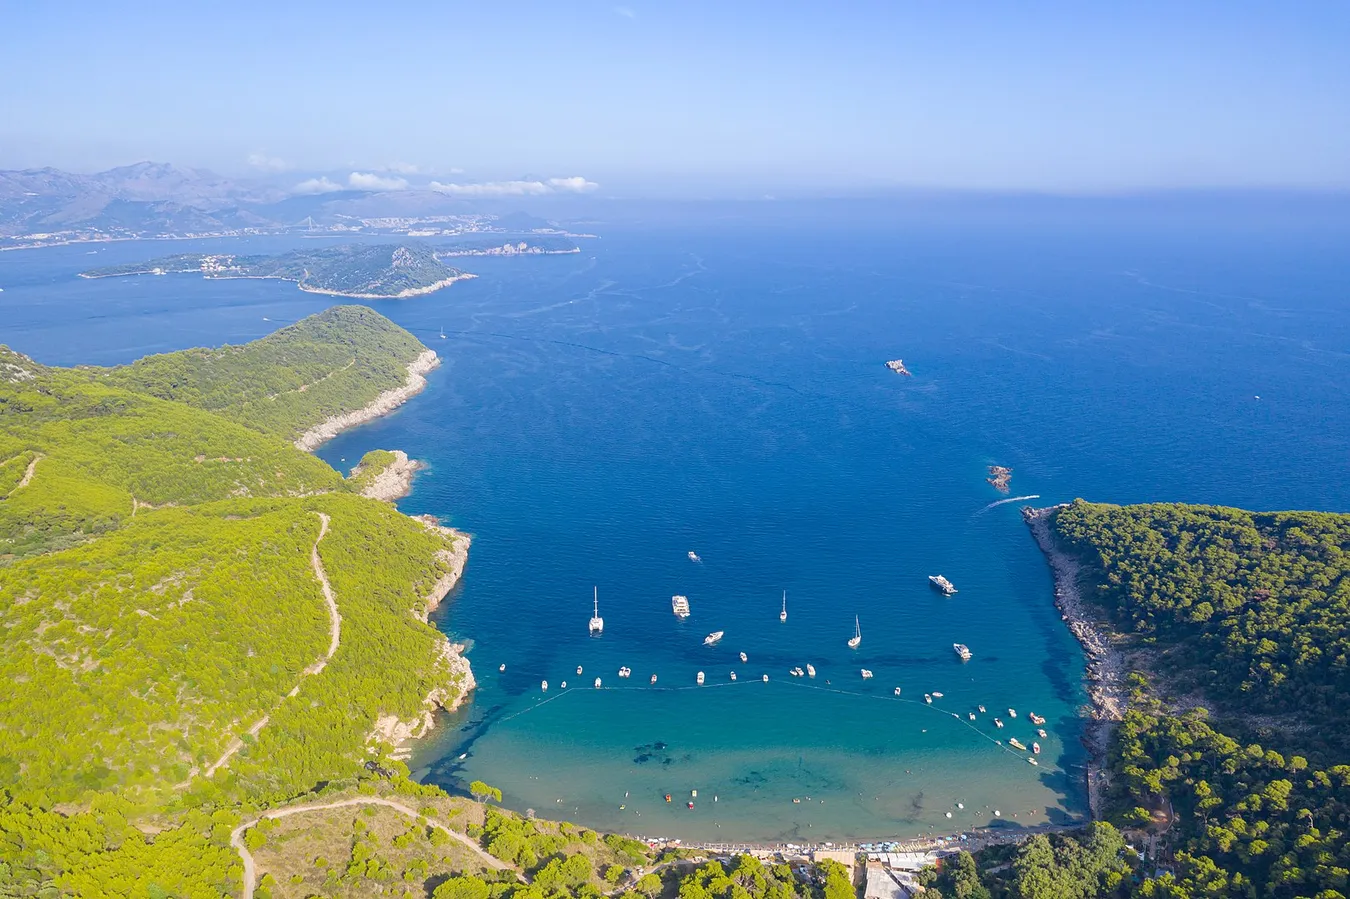 Vista aérea de la Playa de Sunj een Croacia.